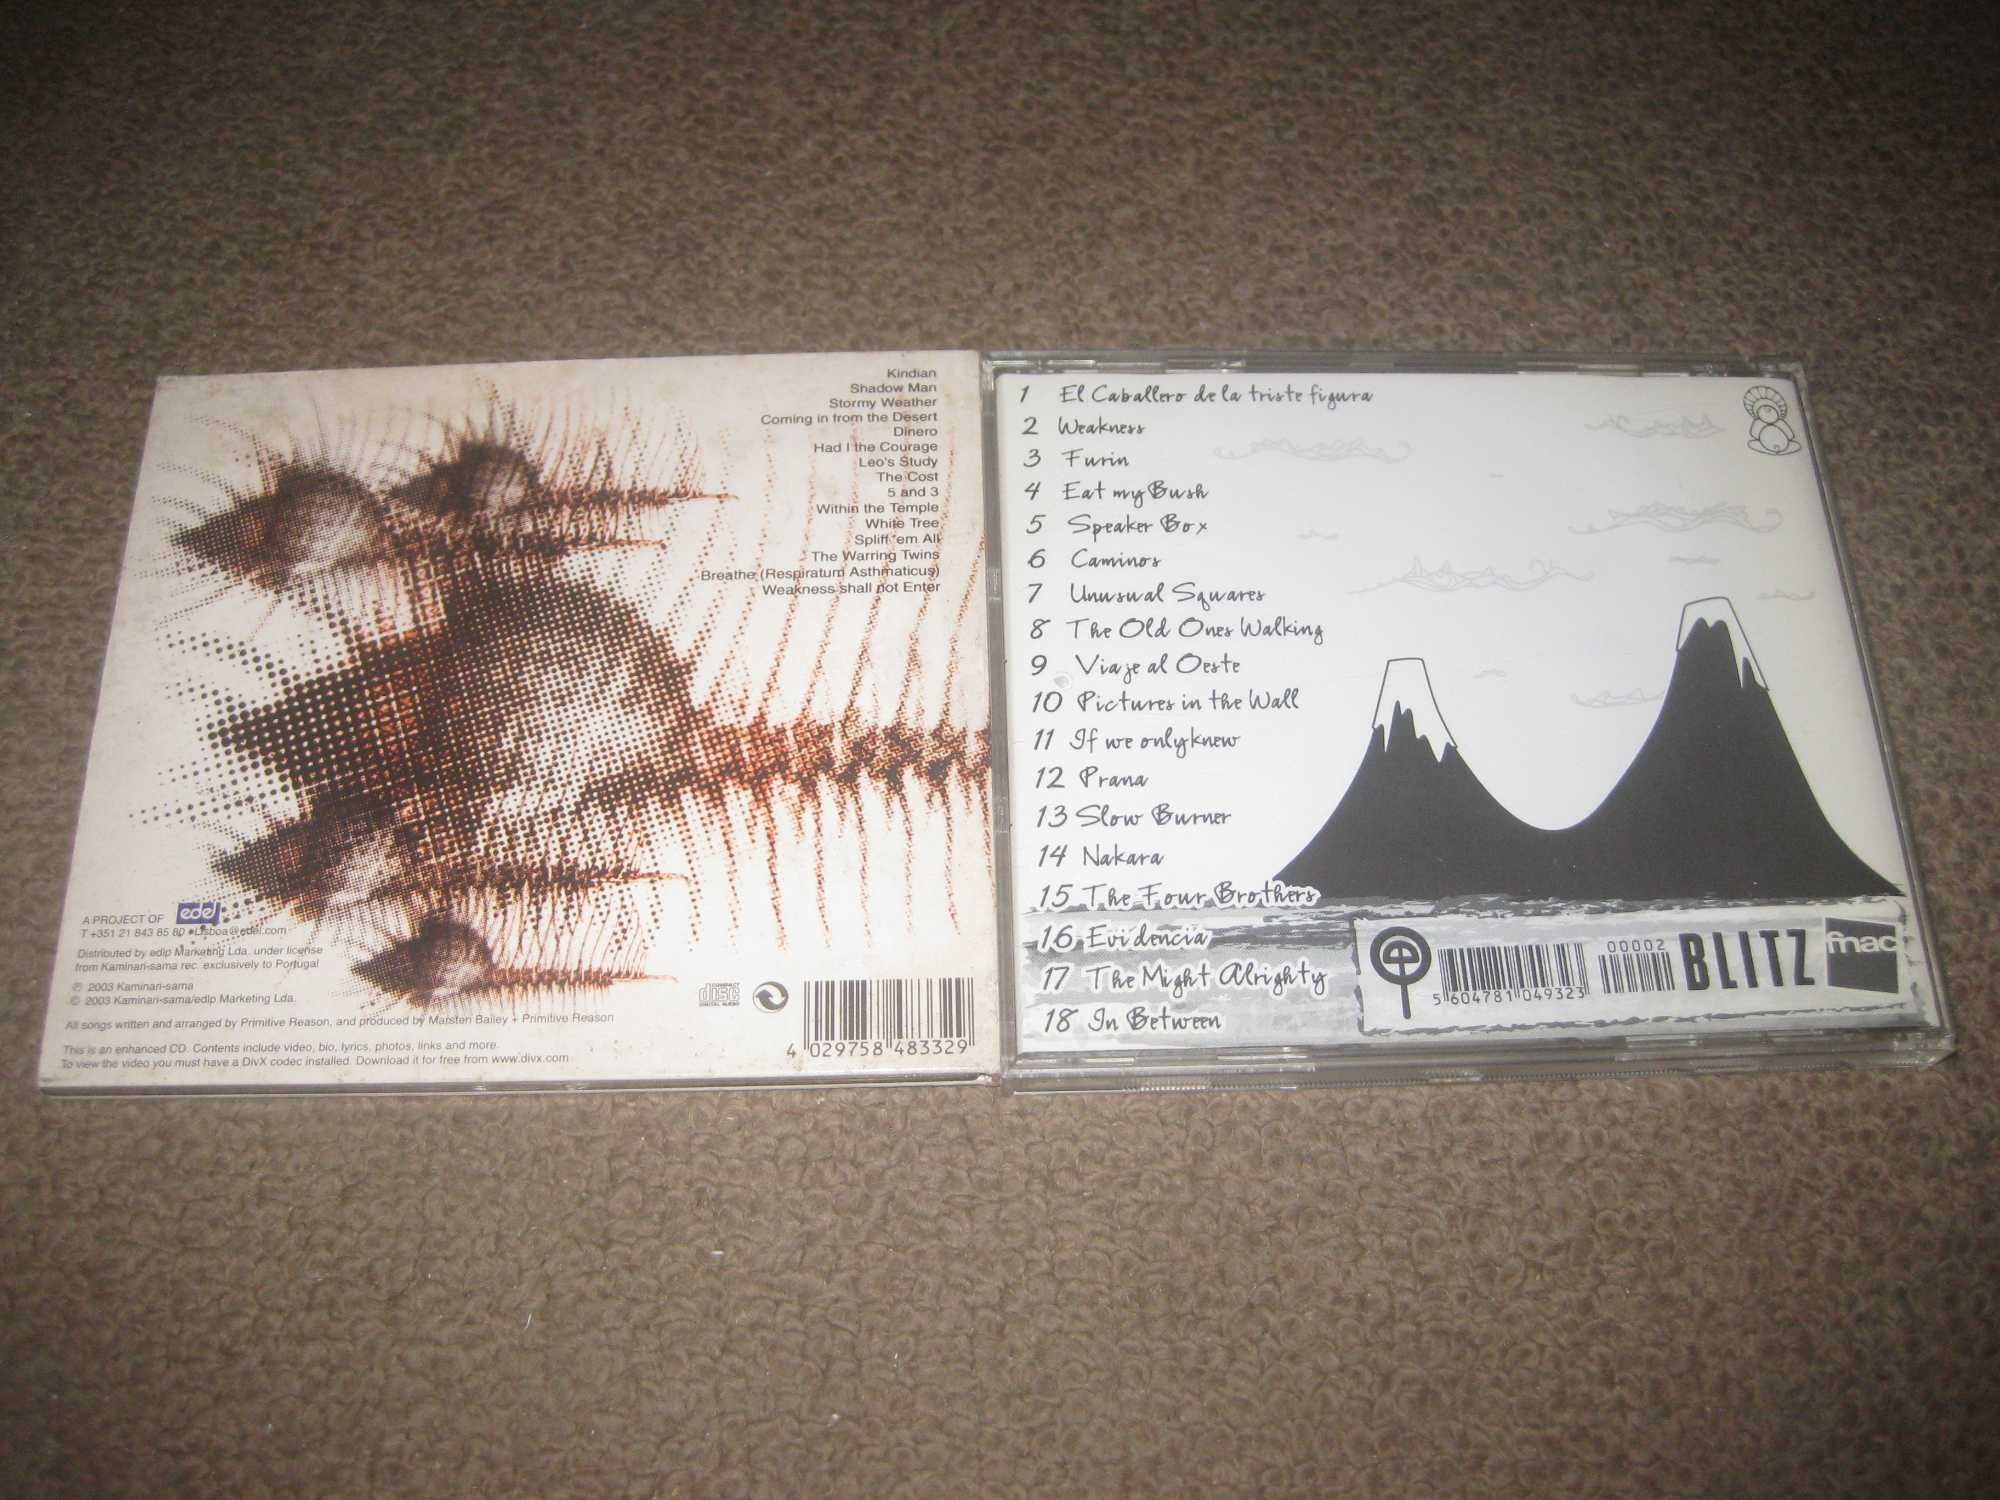 2 CDs dos "Primitive Reason"